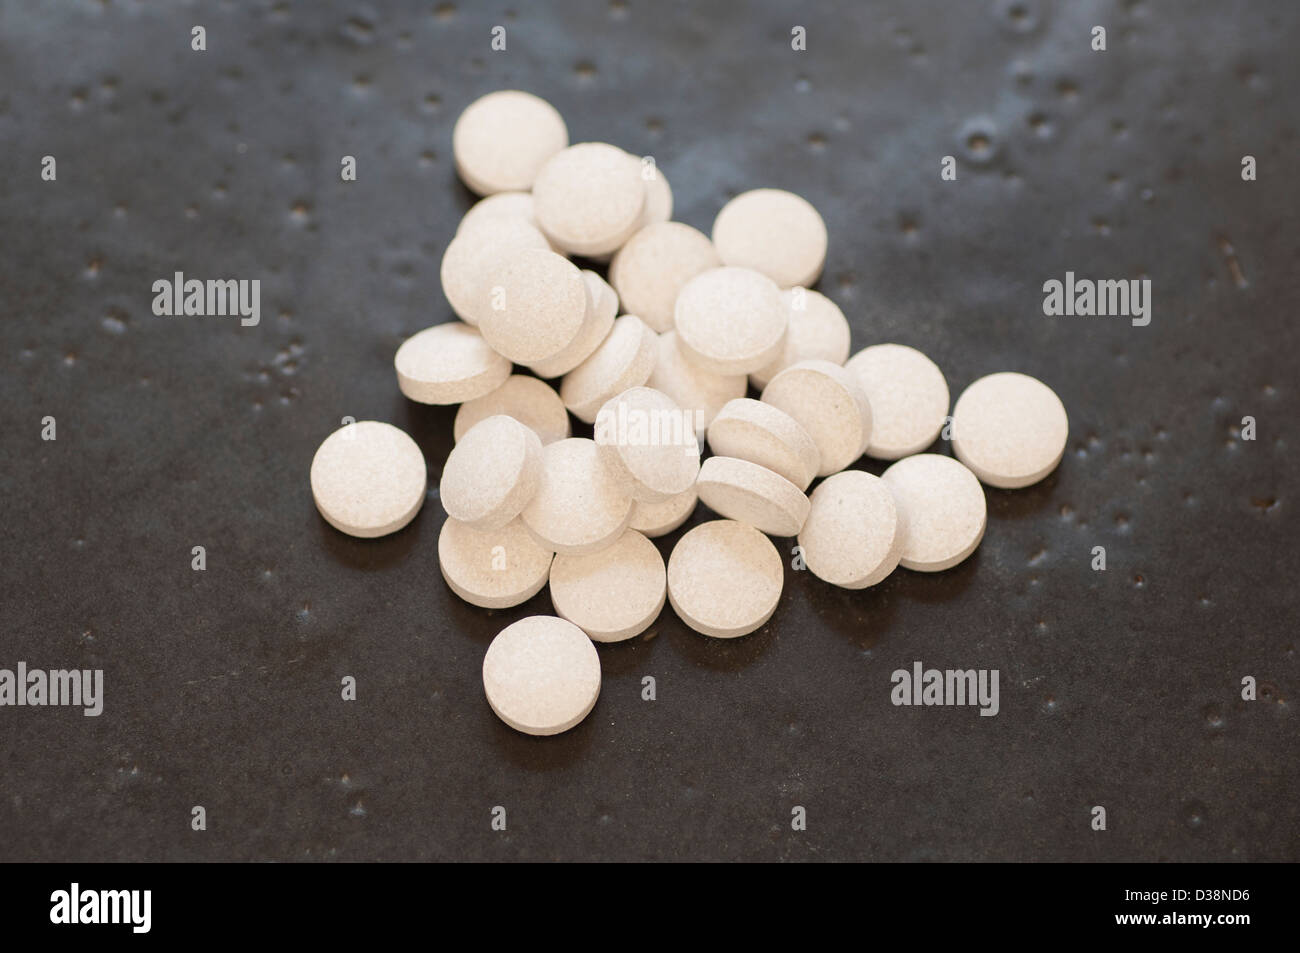 Vista cercana de pastillas de magnesio suplemento dietético Foto de stock